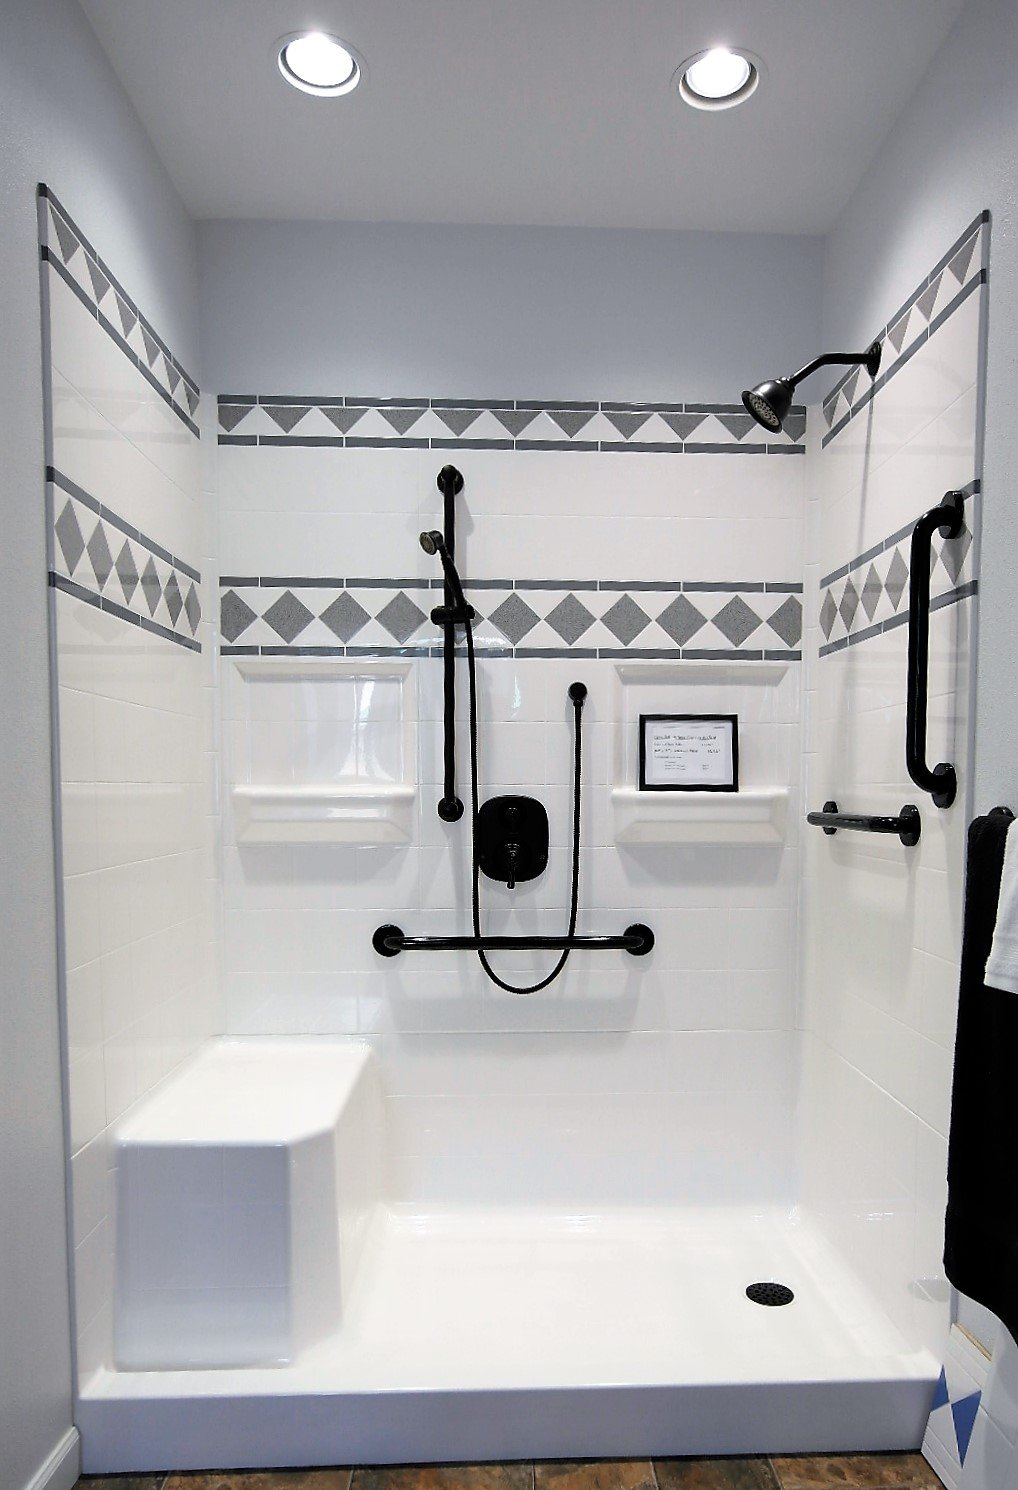 Ada Shower Ada Compliant Showers Aging Safely Baths